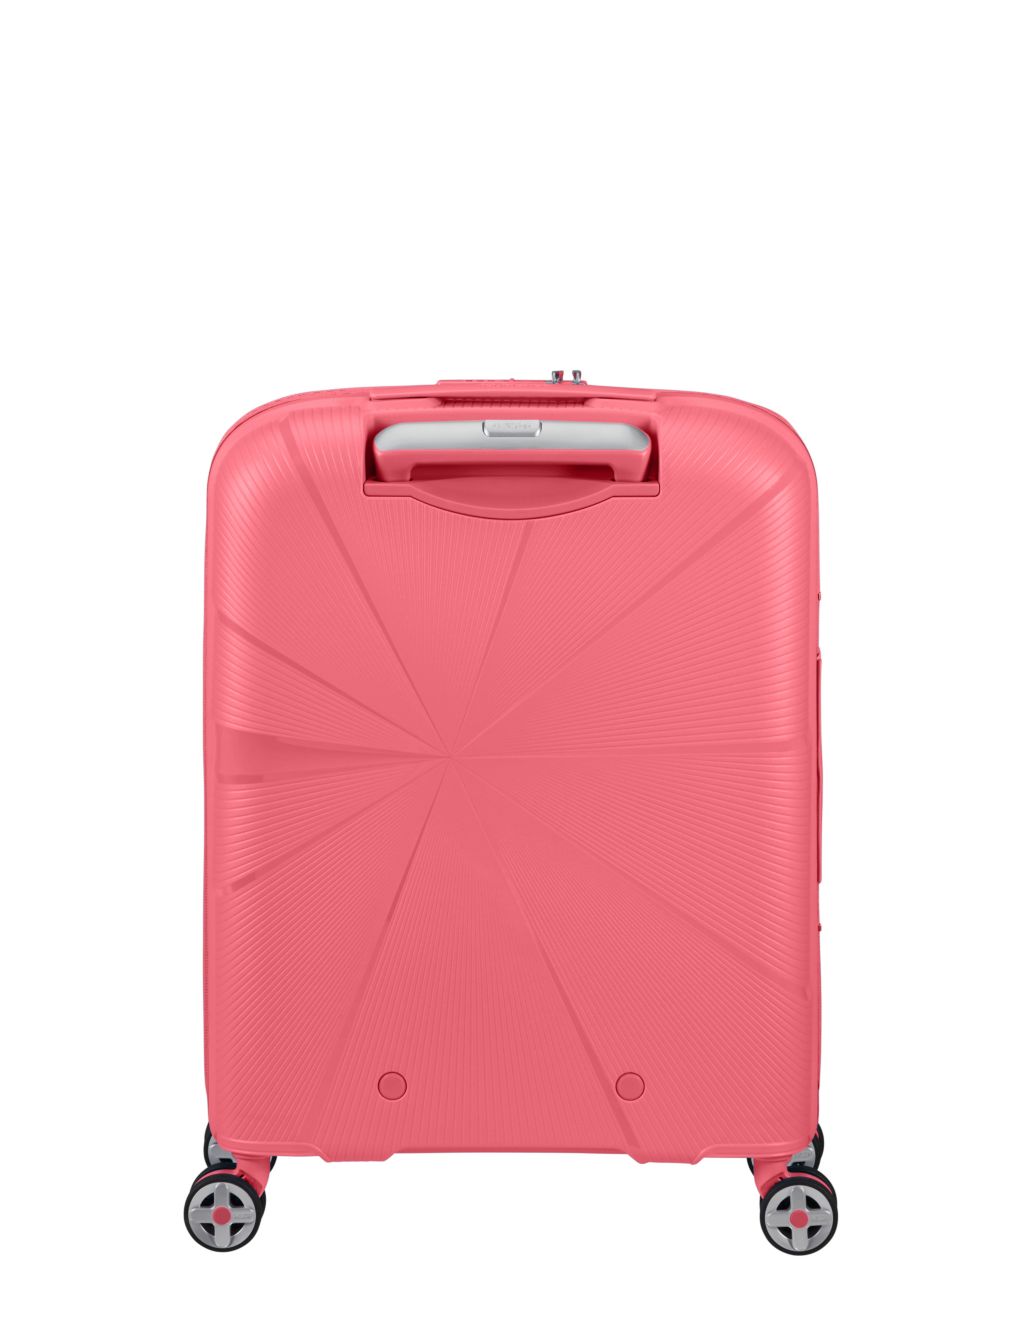 Starvibe 4 Wheel Hard Shell Cabin Suitcase image 3